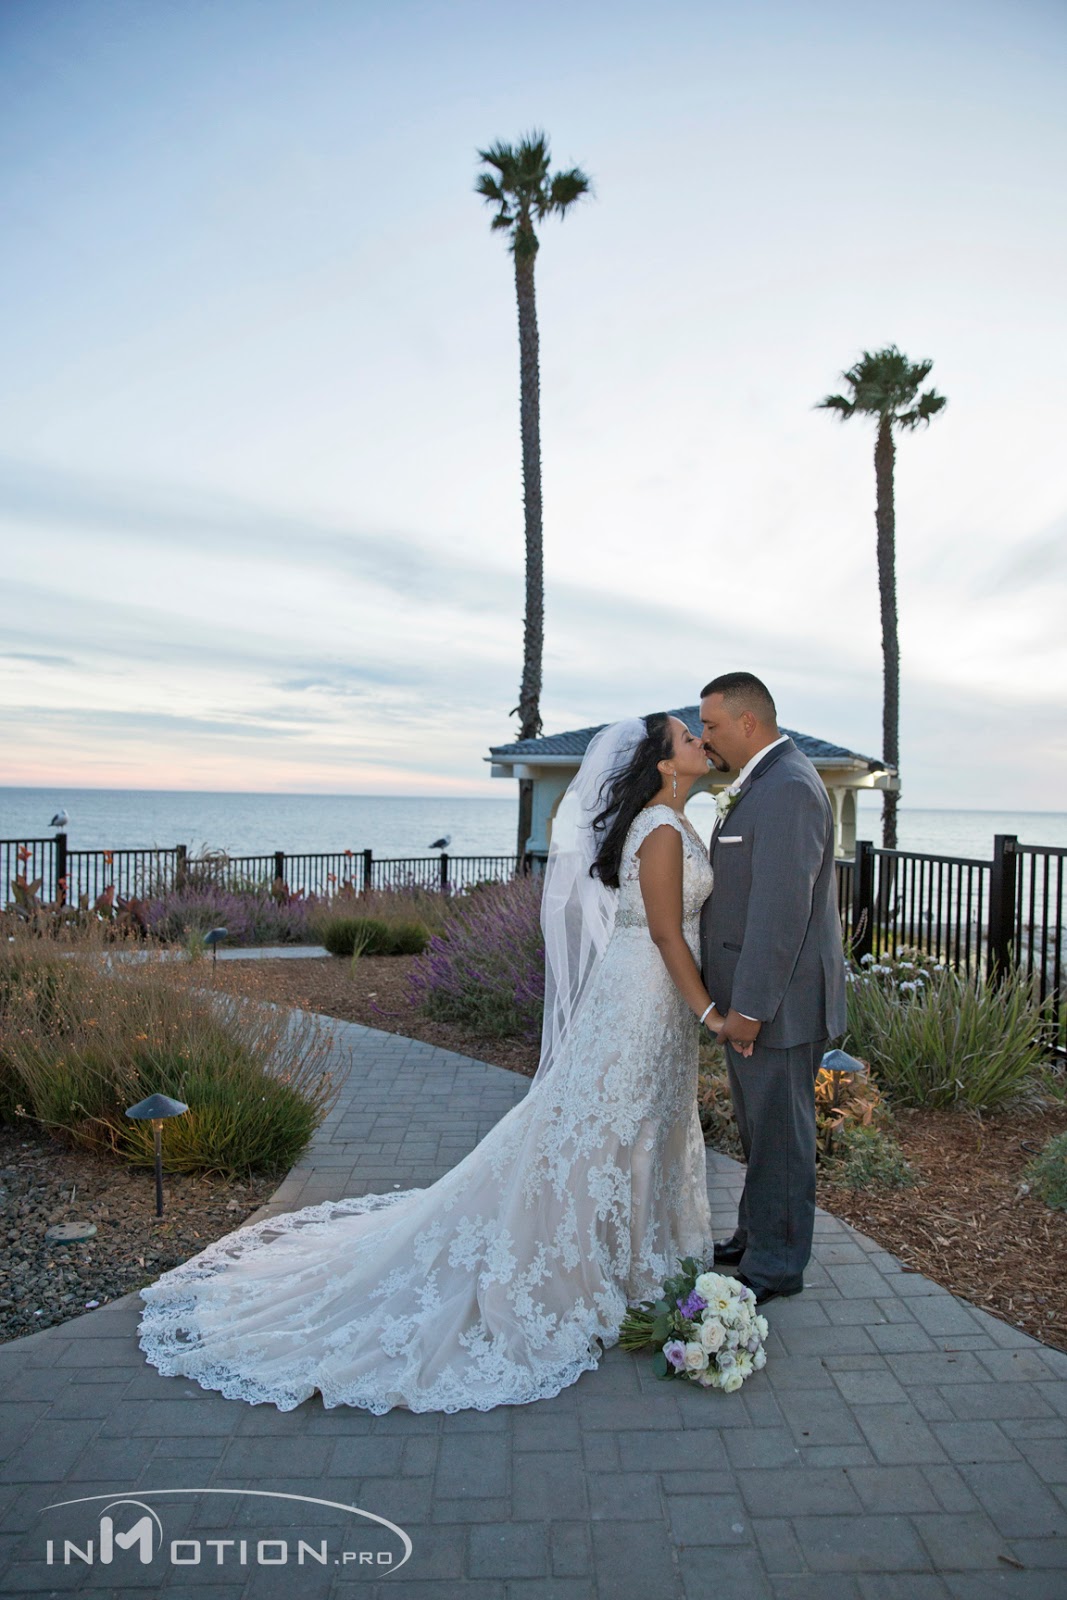 Perla & Ernesto's Wedding | Pismo Beach California ...